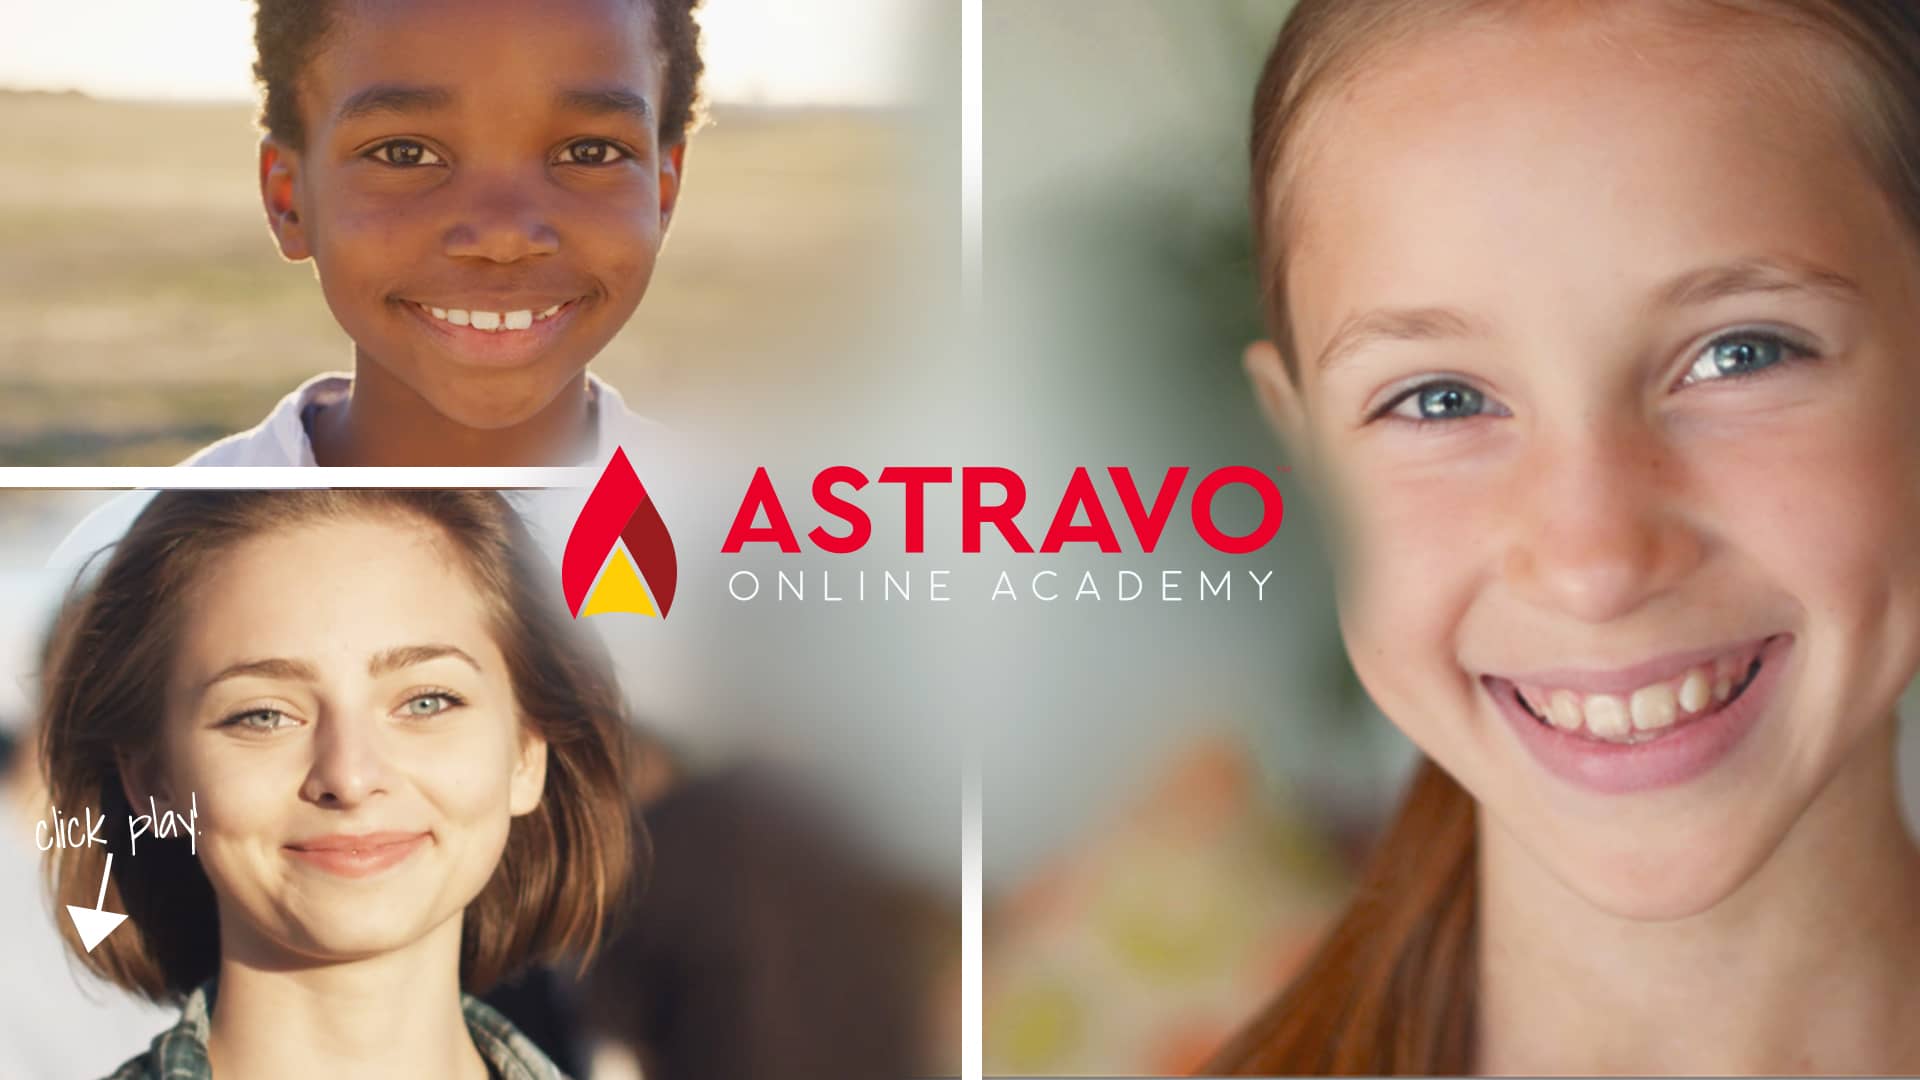 Astravo Online Academy Online K 12 School on Vimeo